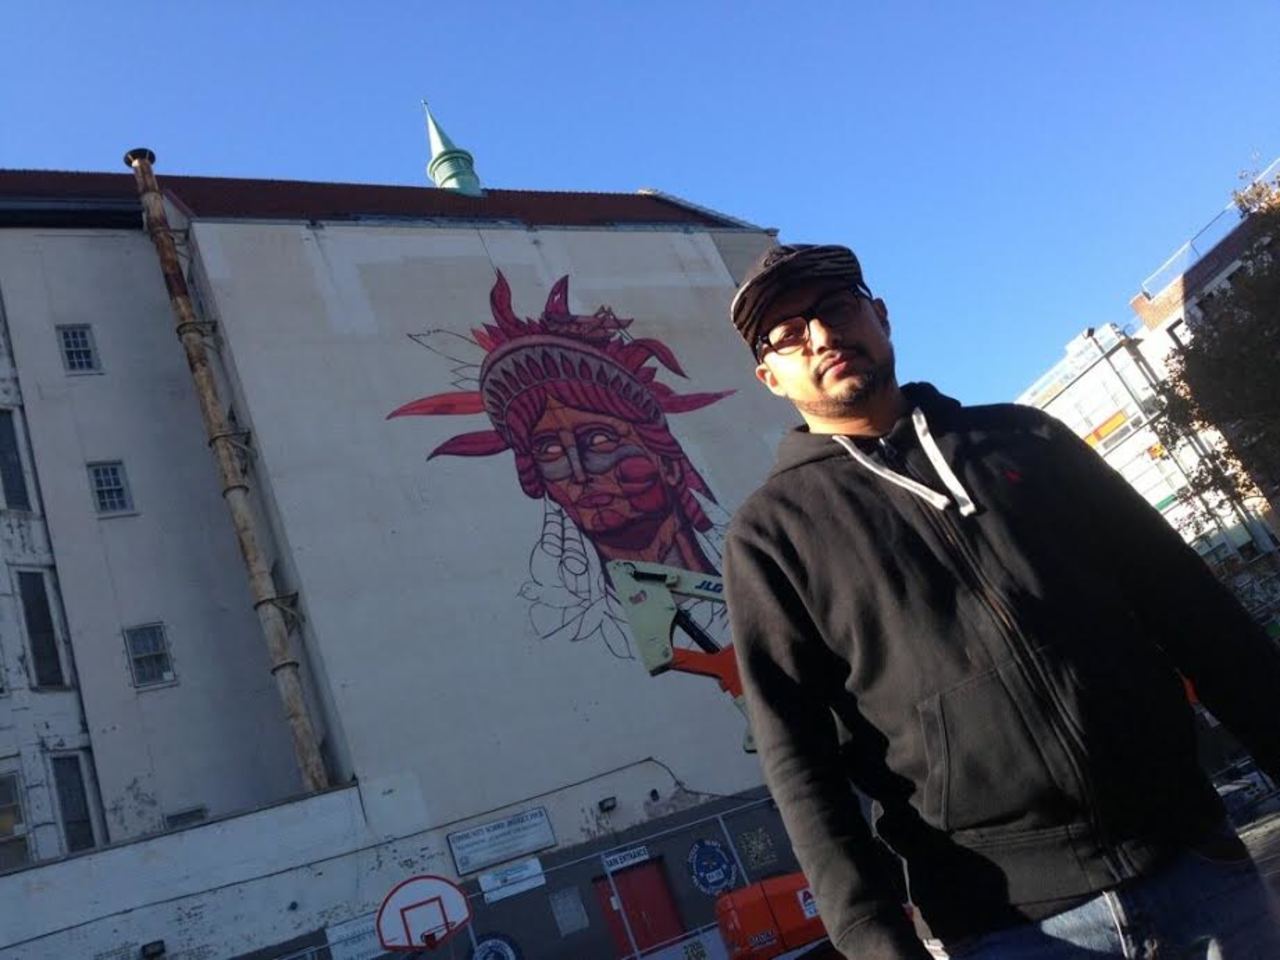 Sego painting a mural on a school in  Harlem! #sego #harlem #mural #nyc #art #streetart #graffiti http://t.co/KOlvCQGJME